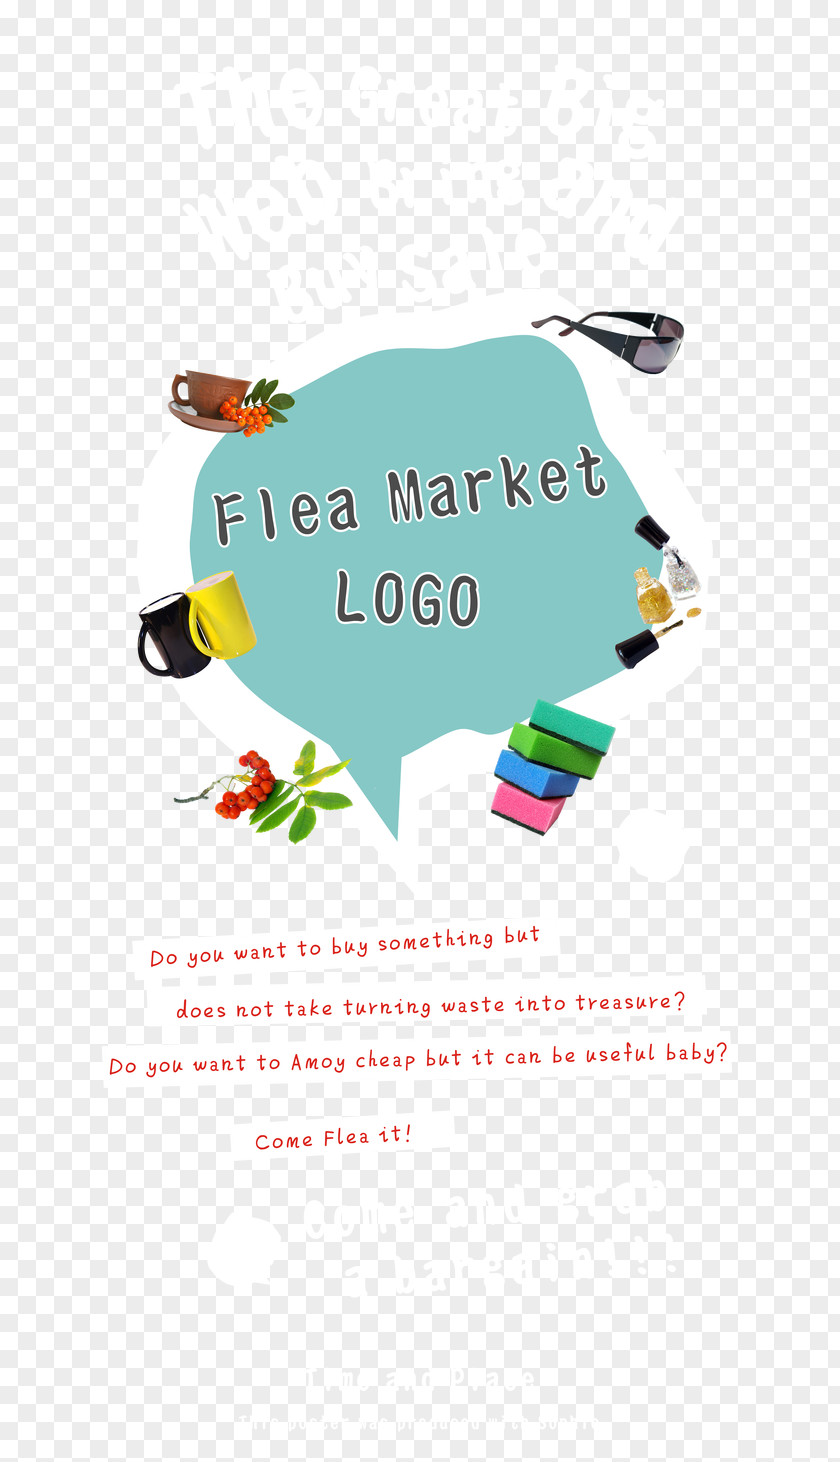 Flea Market Chin Poster Illustration PNG